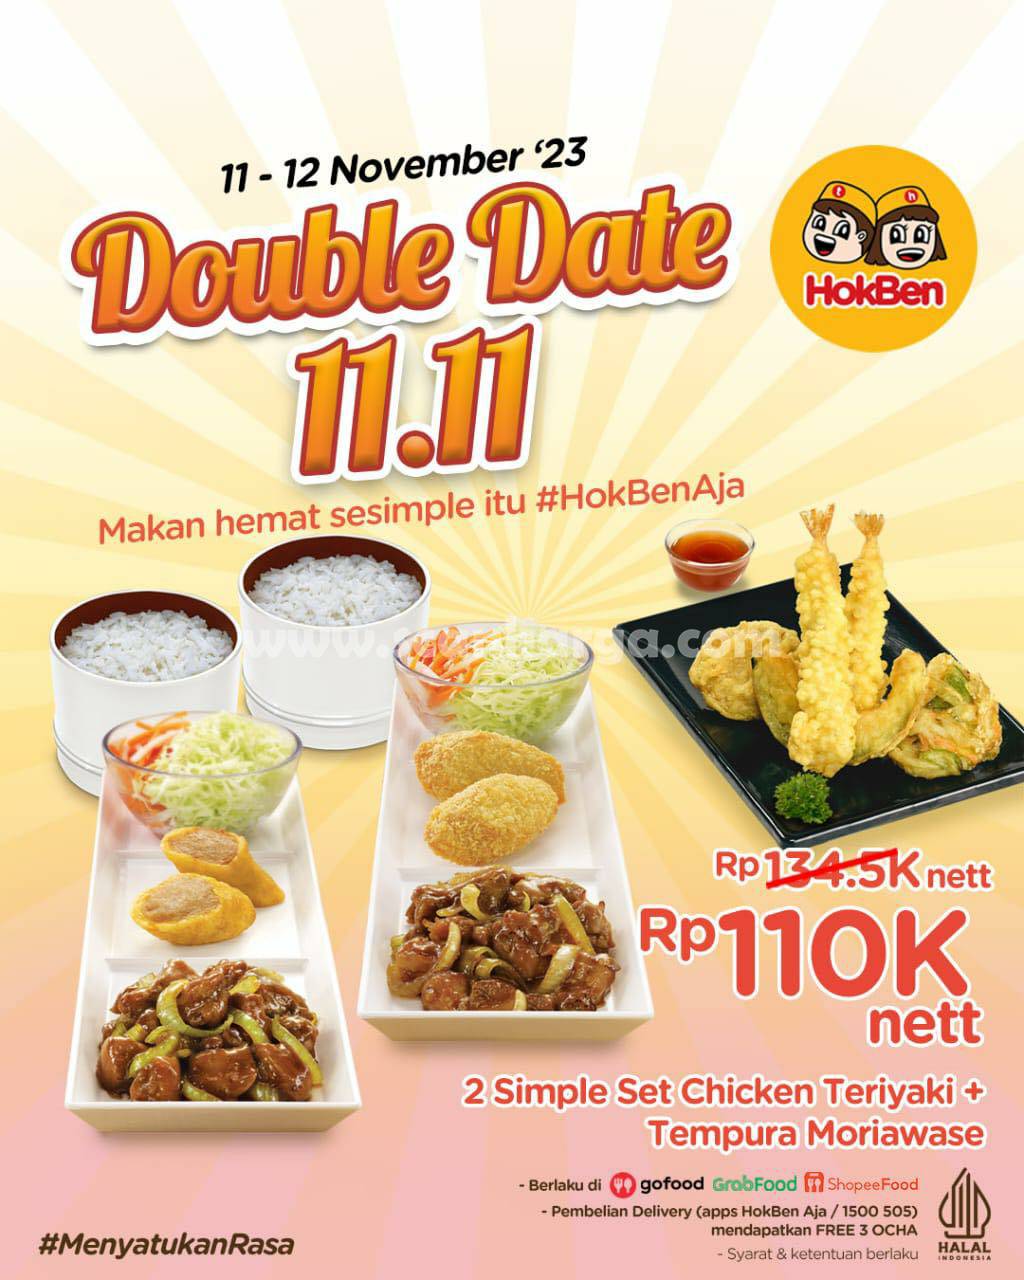 PROMO HOKBEN DOUBLE DATE 11.11 - Makan Berdua Hanya Rp. 110K